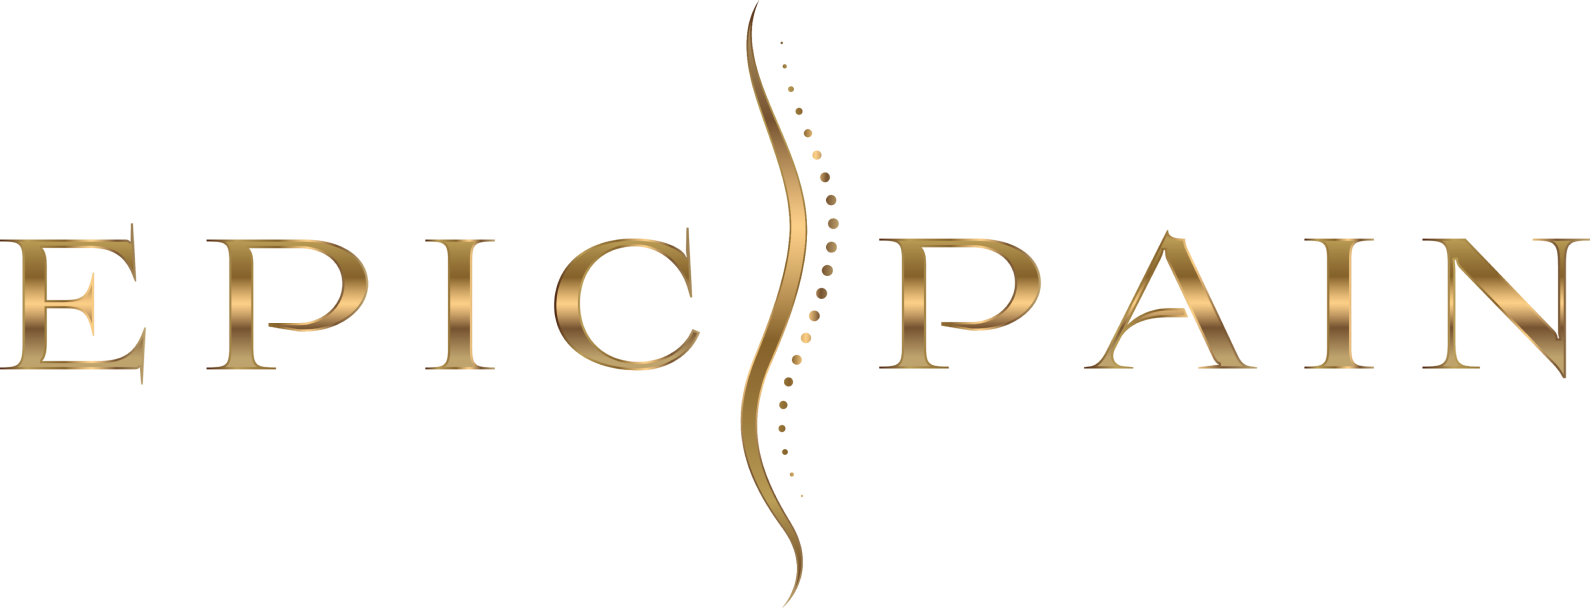 epic pain logo